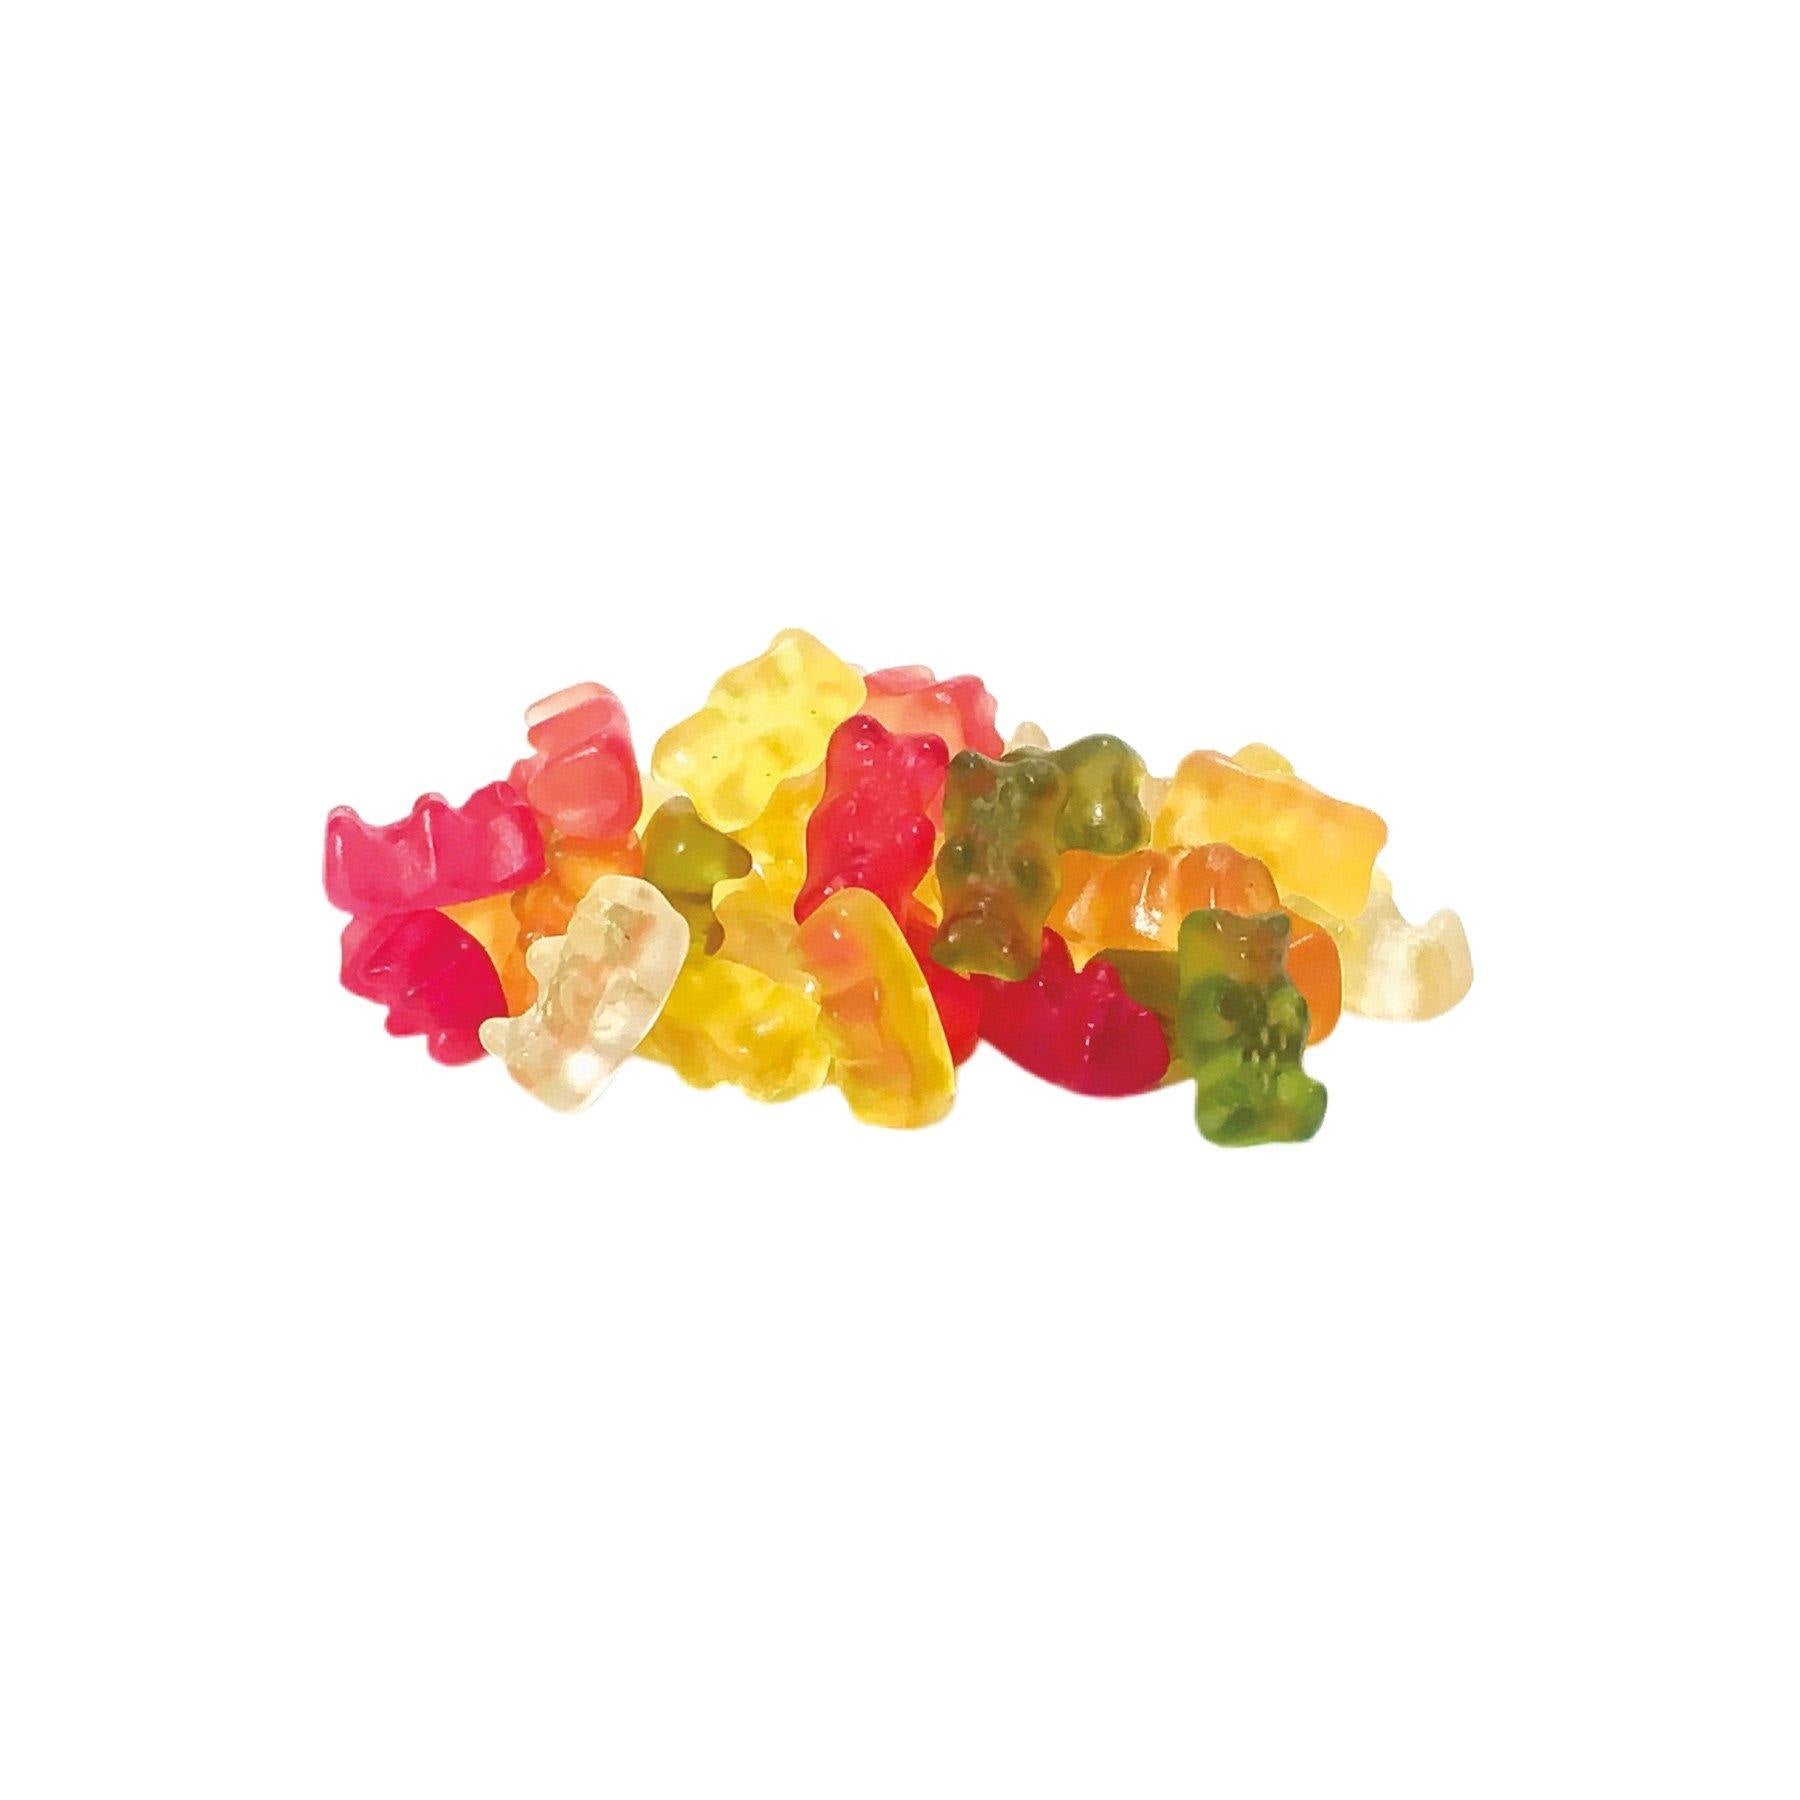 Golden Gummy Bears Hexagonal Jar - The Dormen Food Company